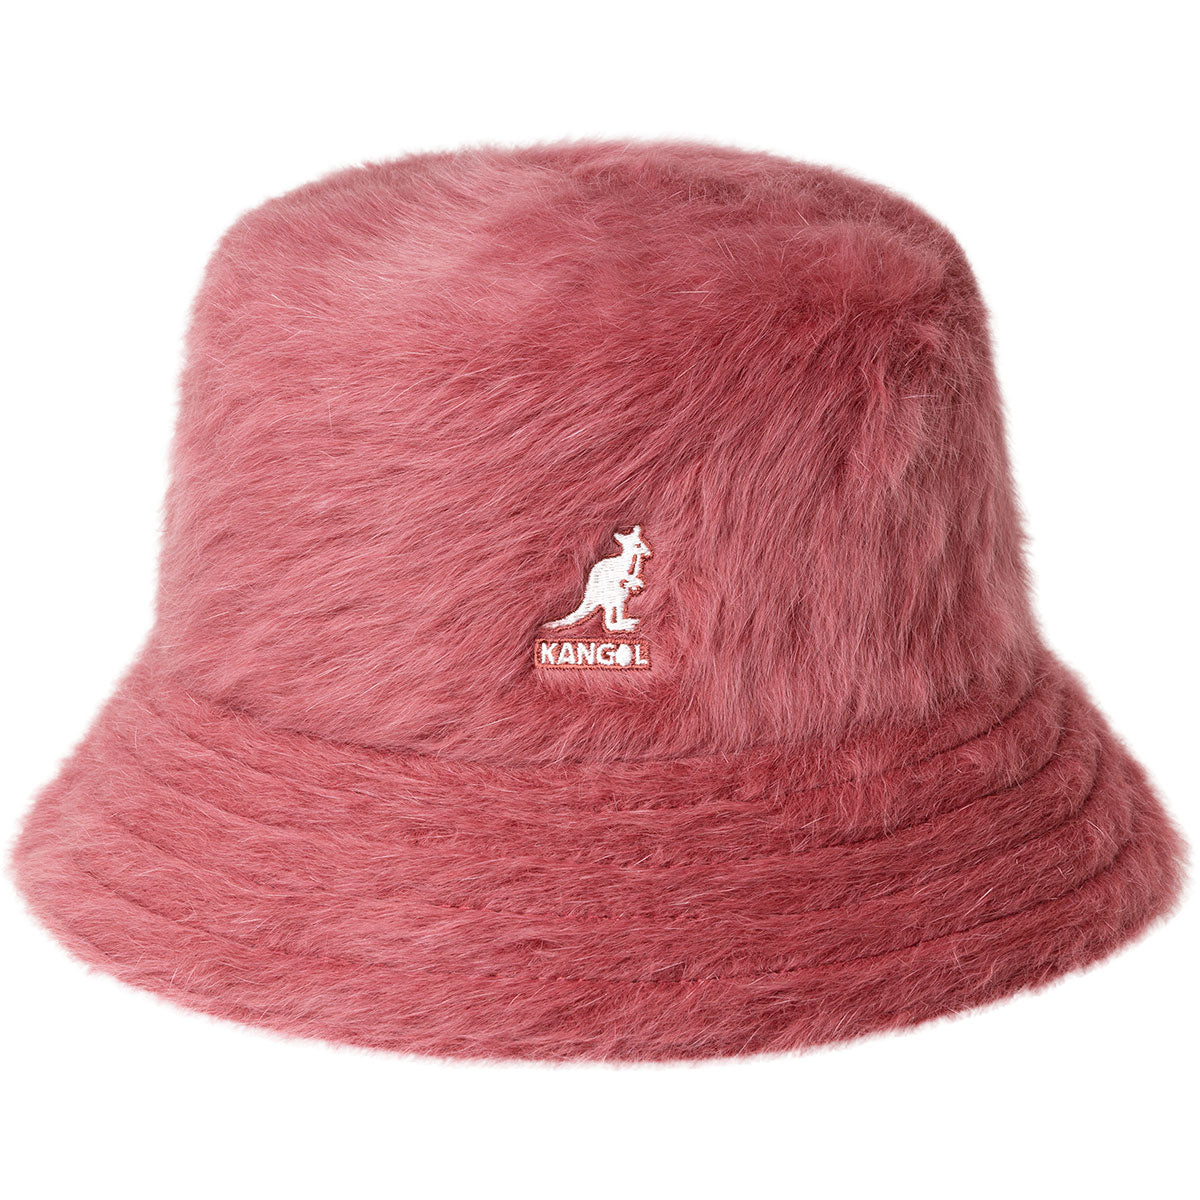 Kangol Furgora Bucket Cramberry - Cappello Lifestyle - Neverland Firenze